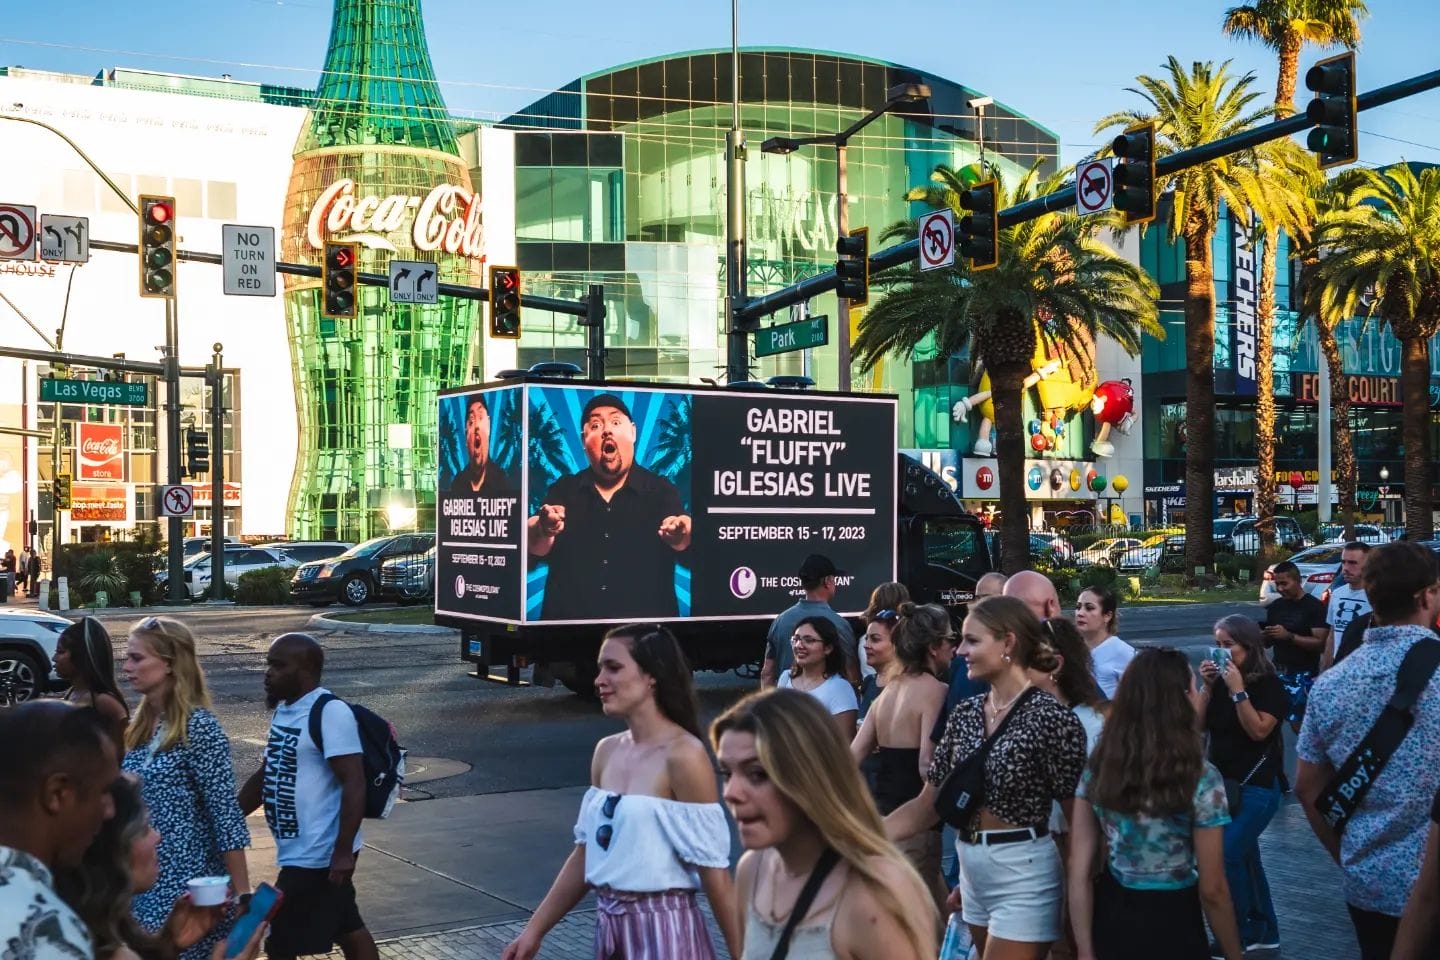 Las Vegas street scene with advertisement truck and pedestrians.